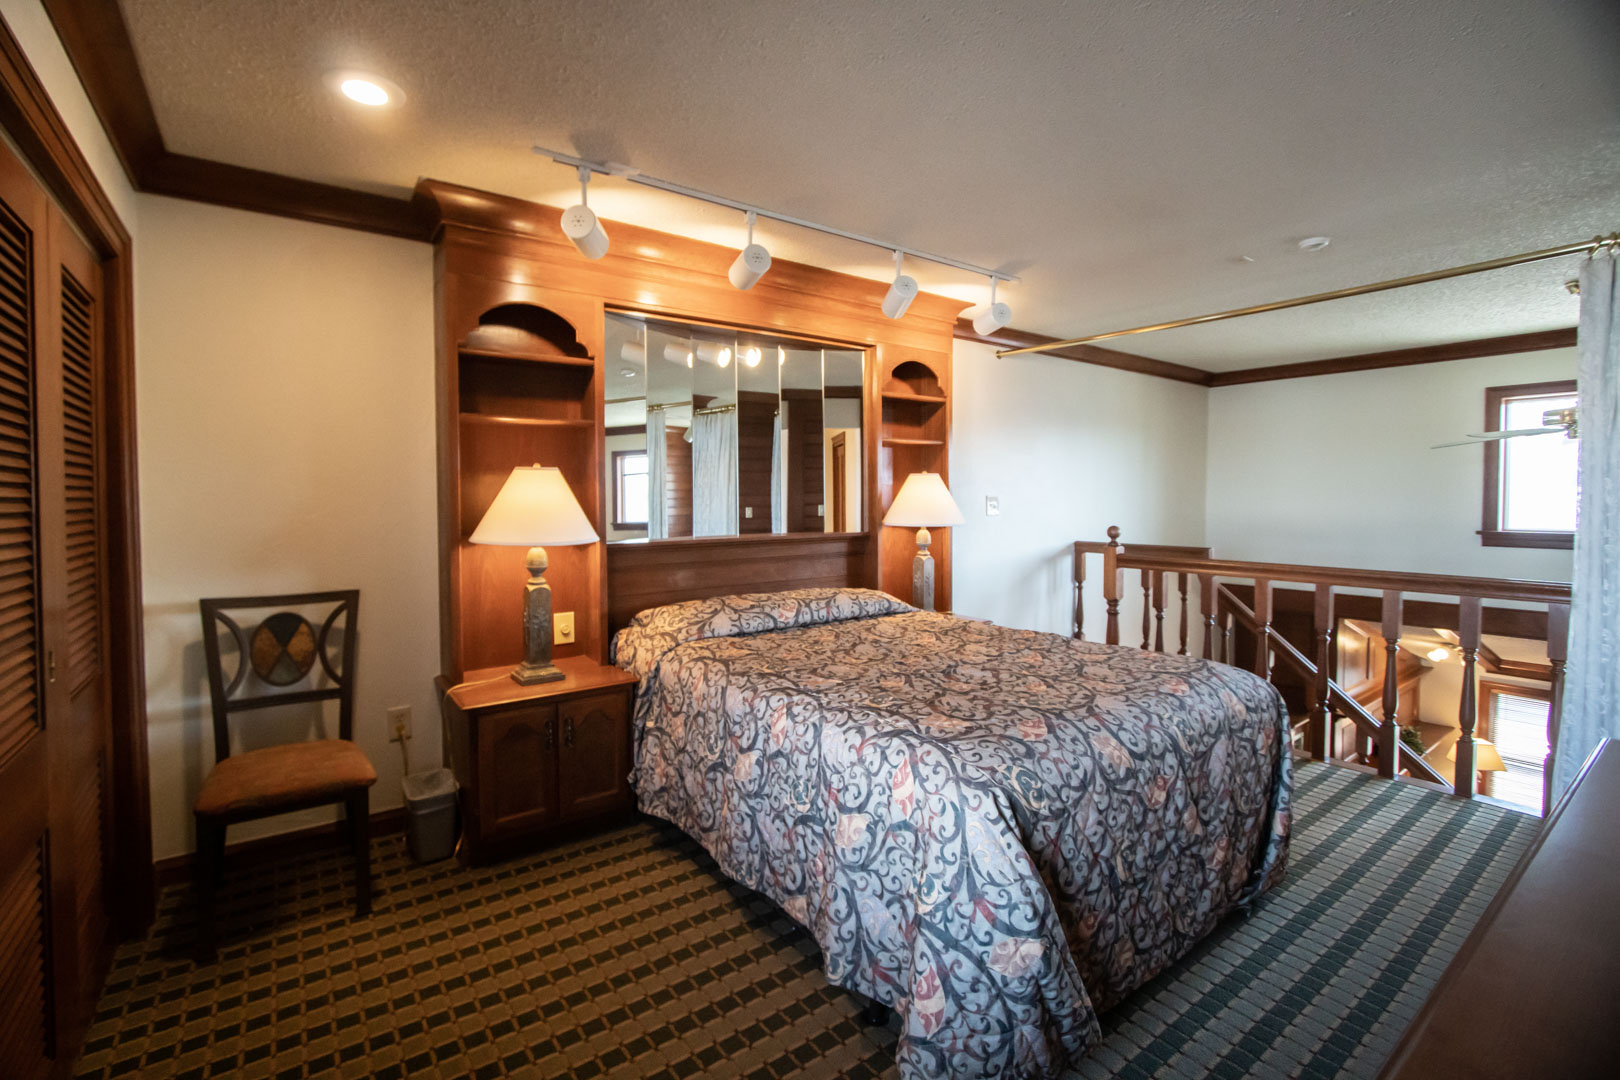 A spacious bedroom loft at VRI's Sunburst Resort in Steamboat Springs, CO.